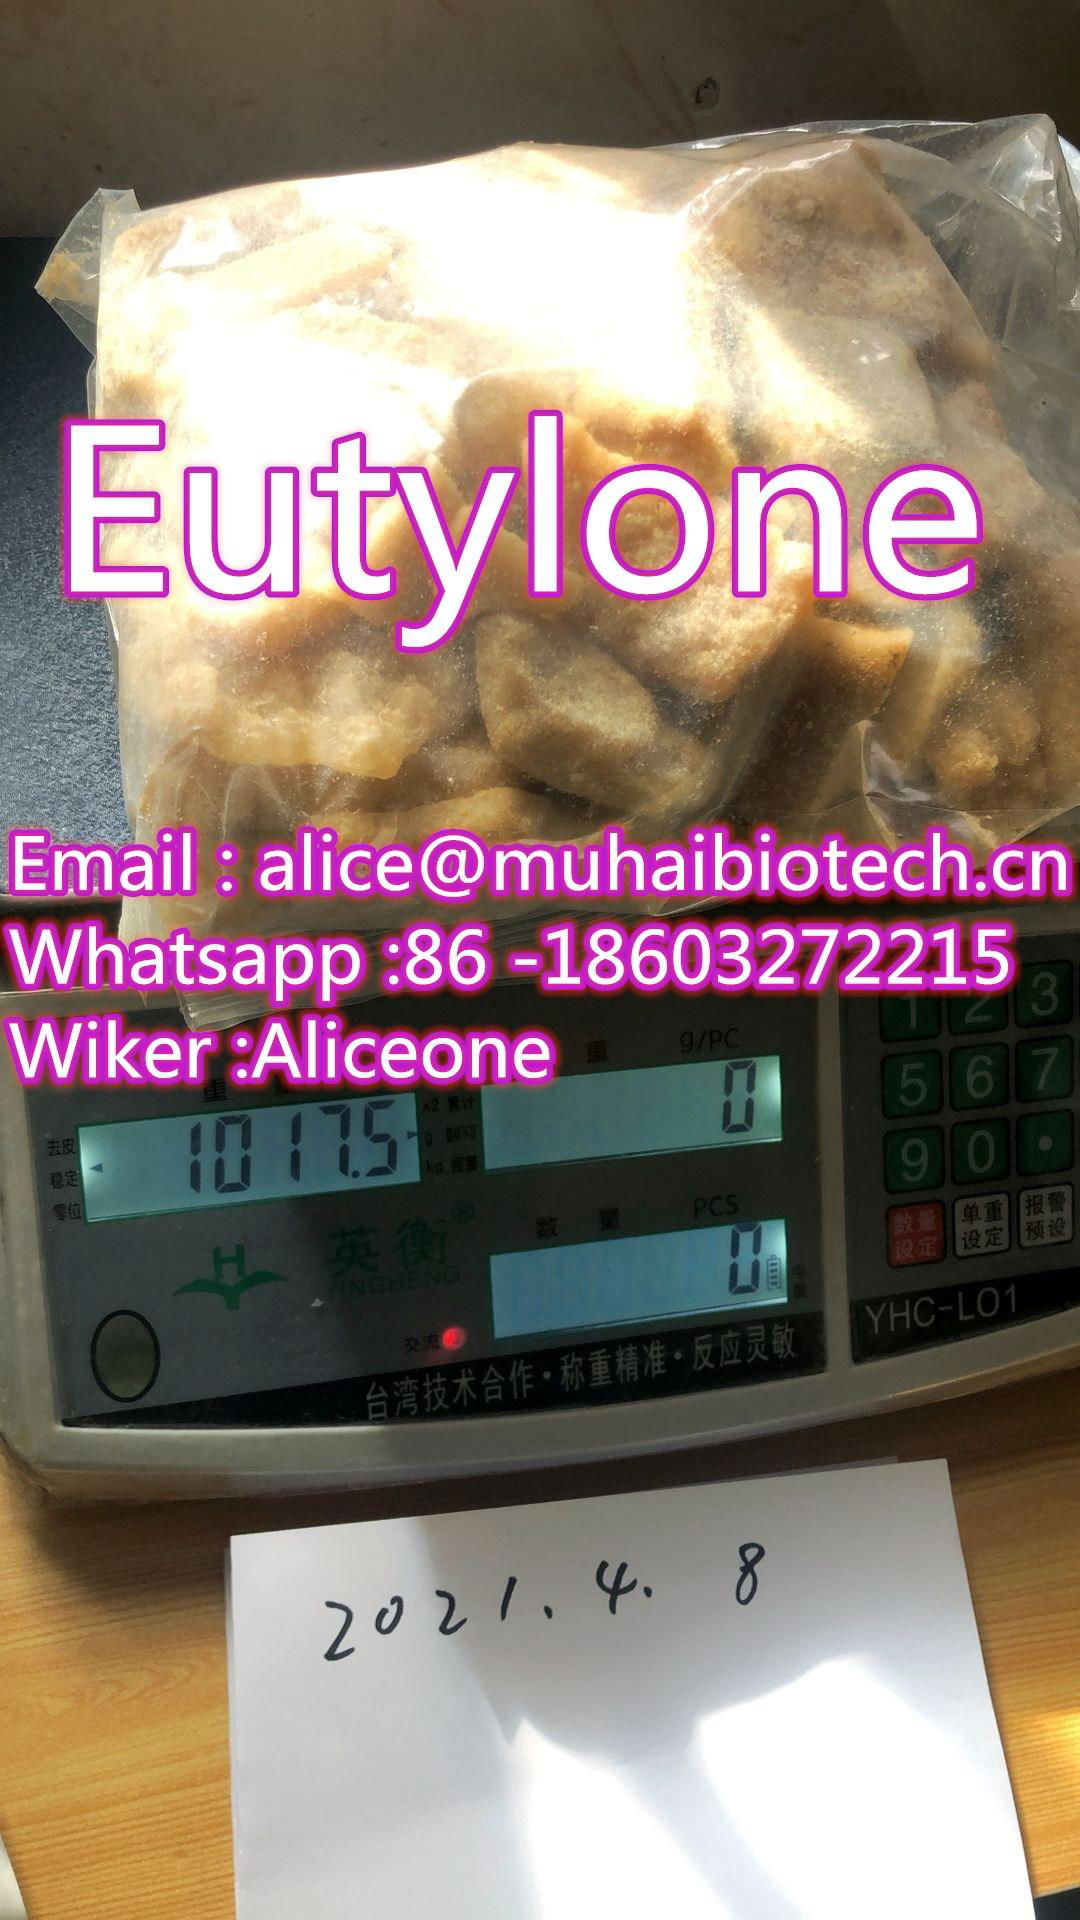 Wiker :Aliceone Newest stocks Eutylones euty eut eu EBK gbk tan crystal best qua 2